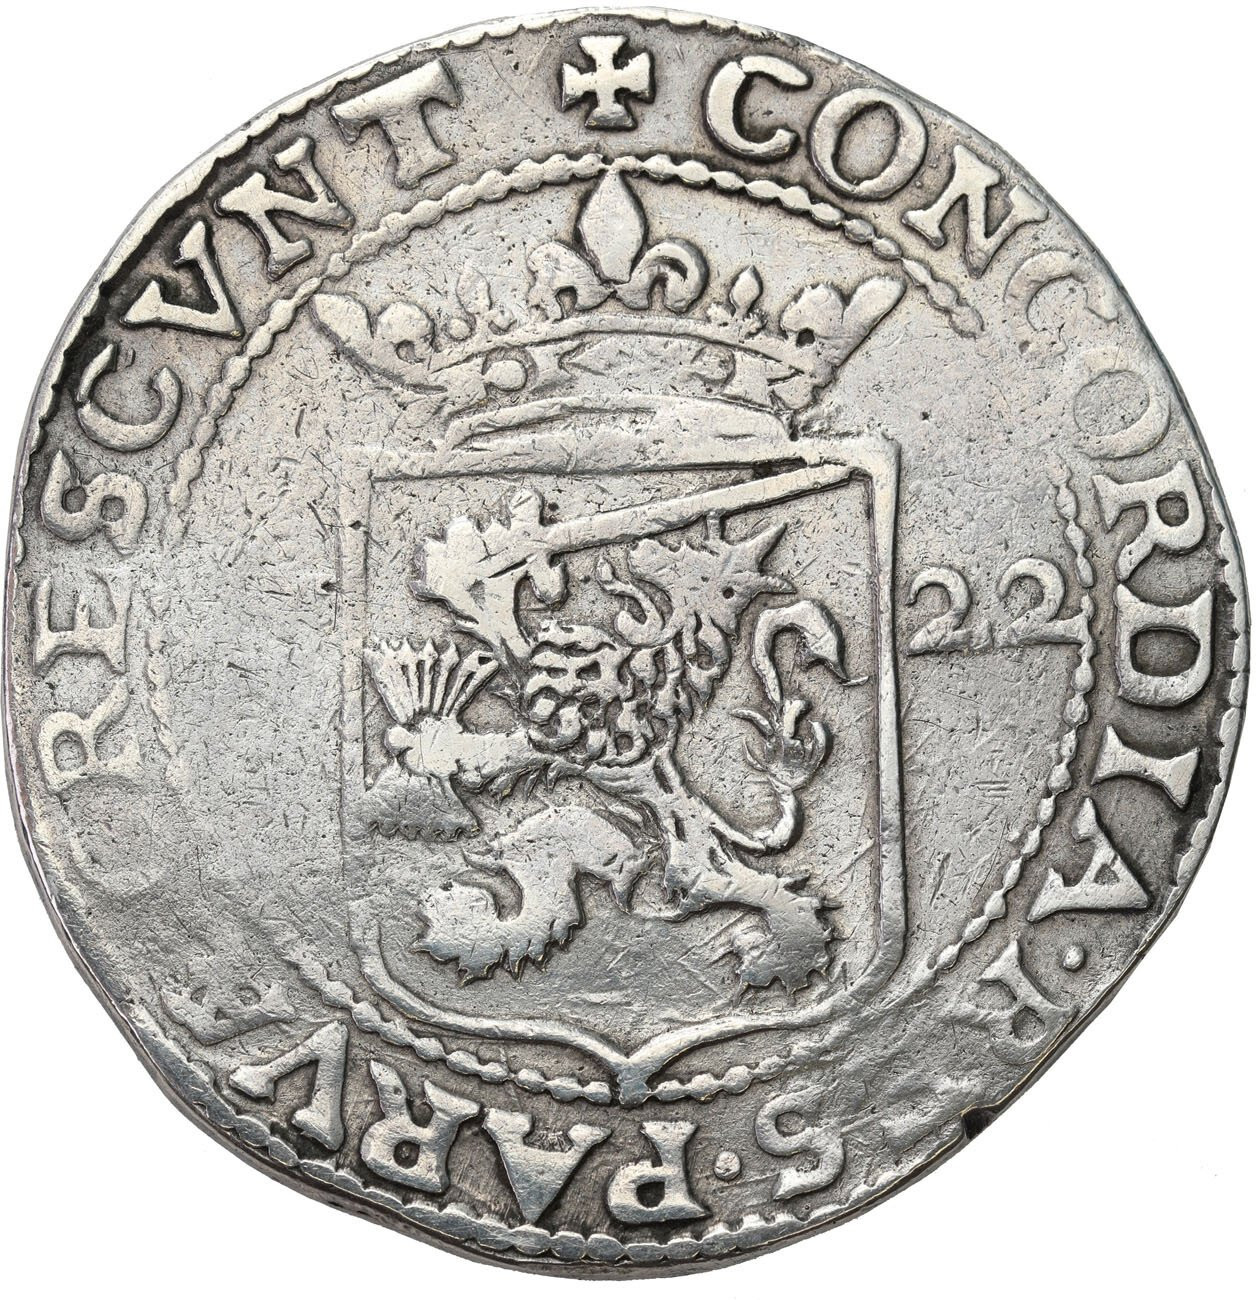 Niderlandy, Westfriesland. Talar 1622